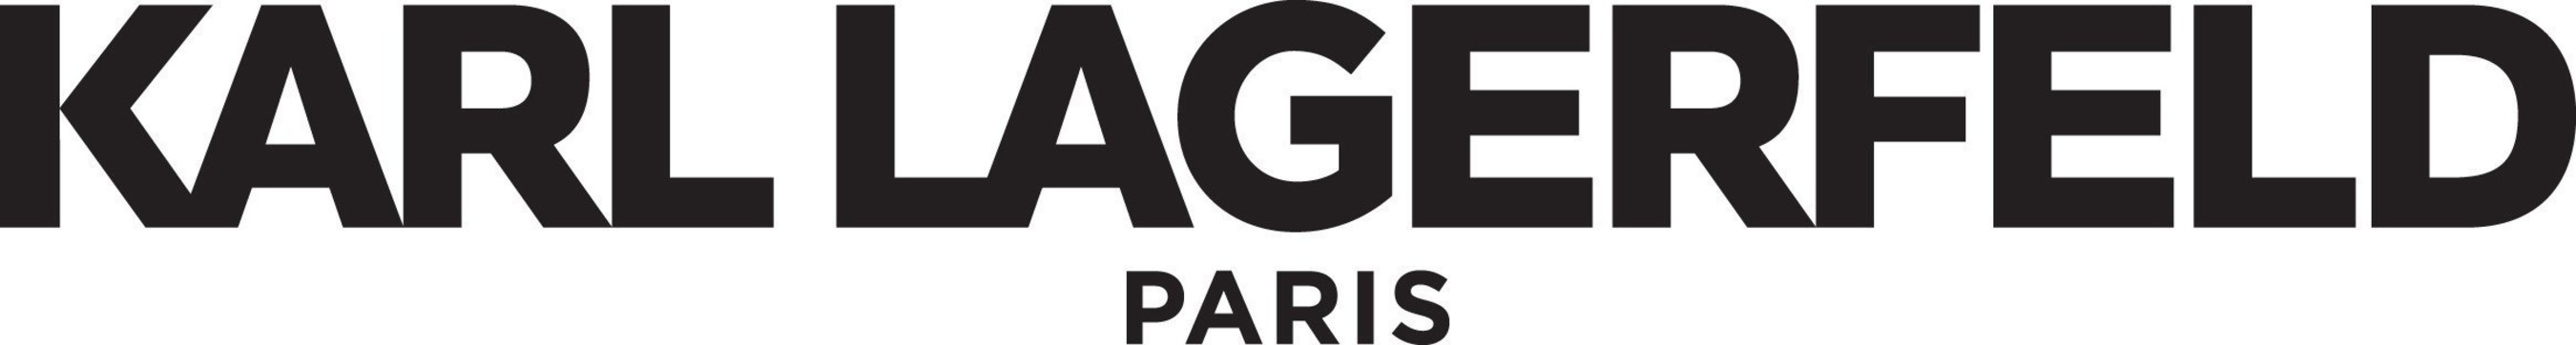 KARL LAGERFELD Paris Logo